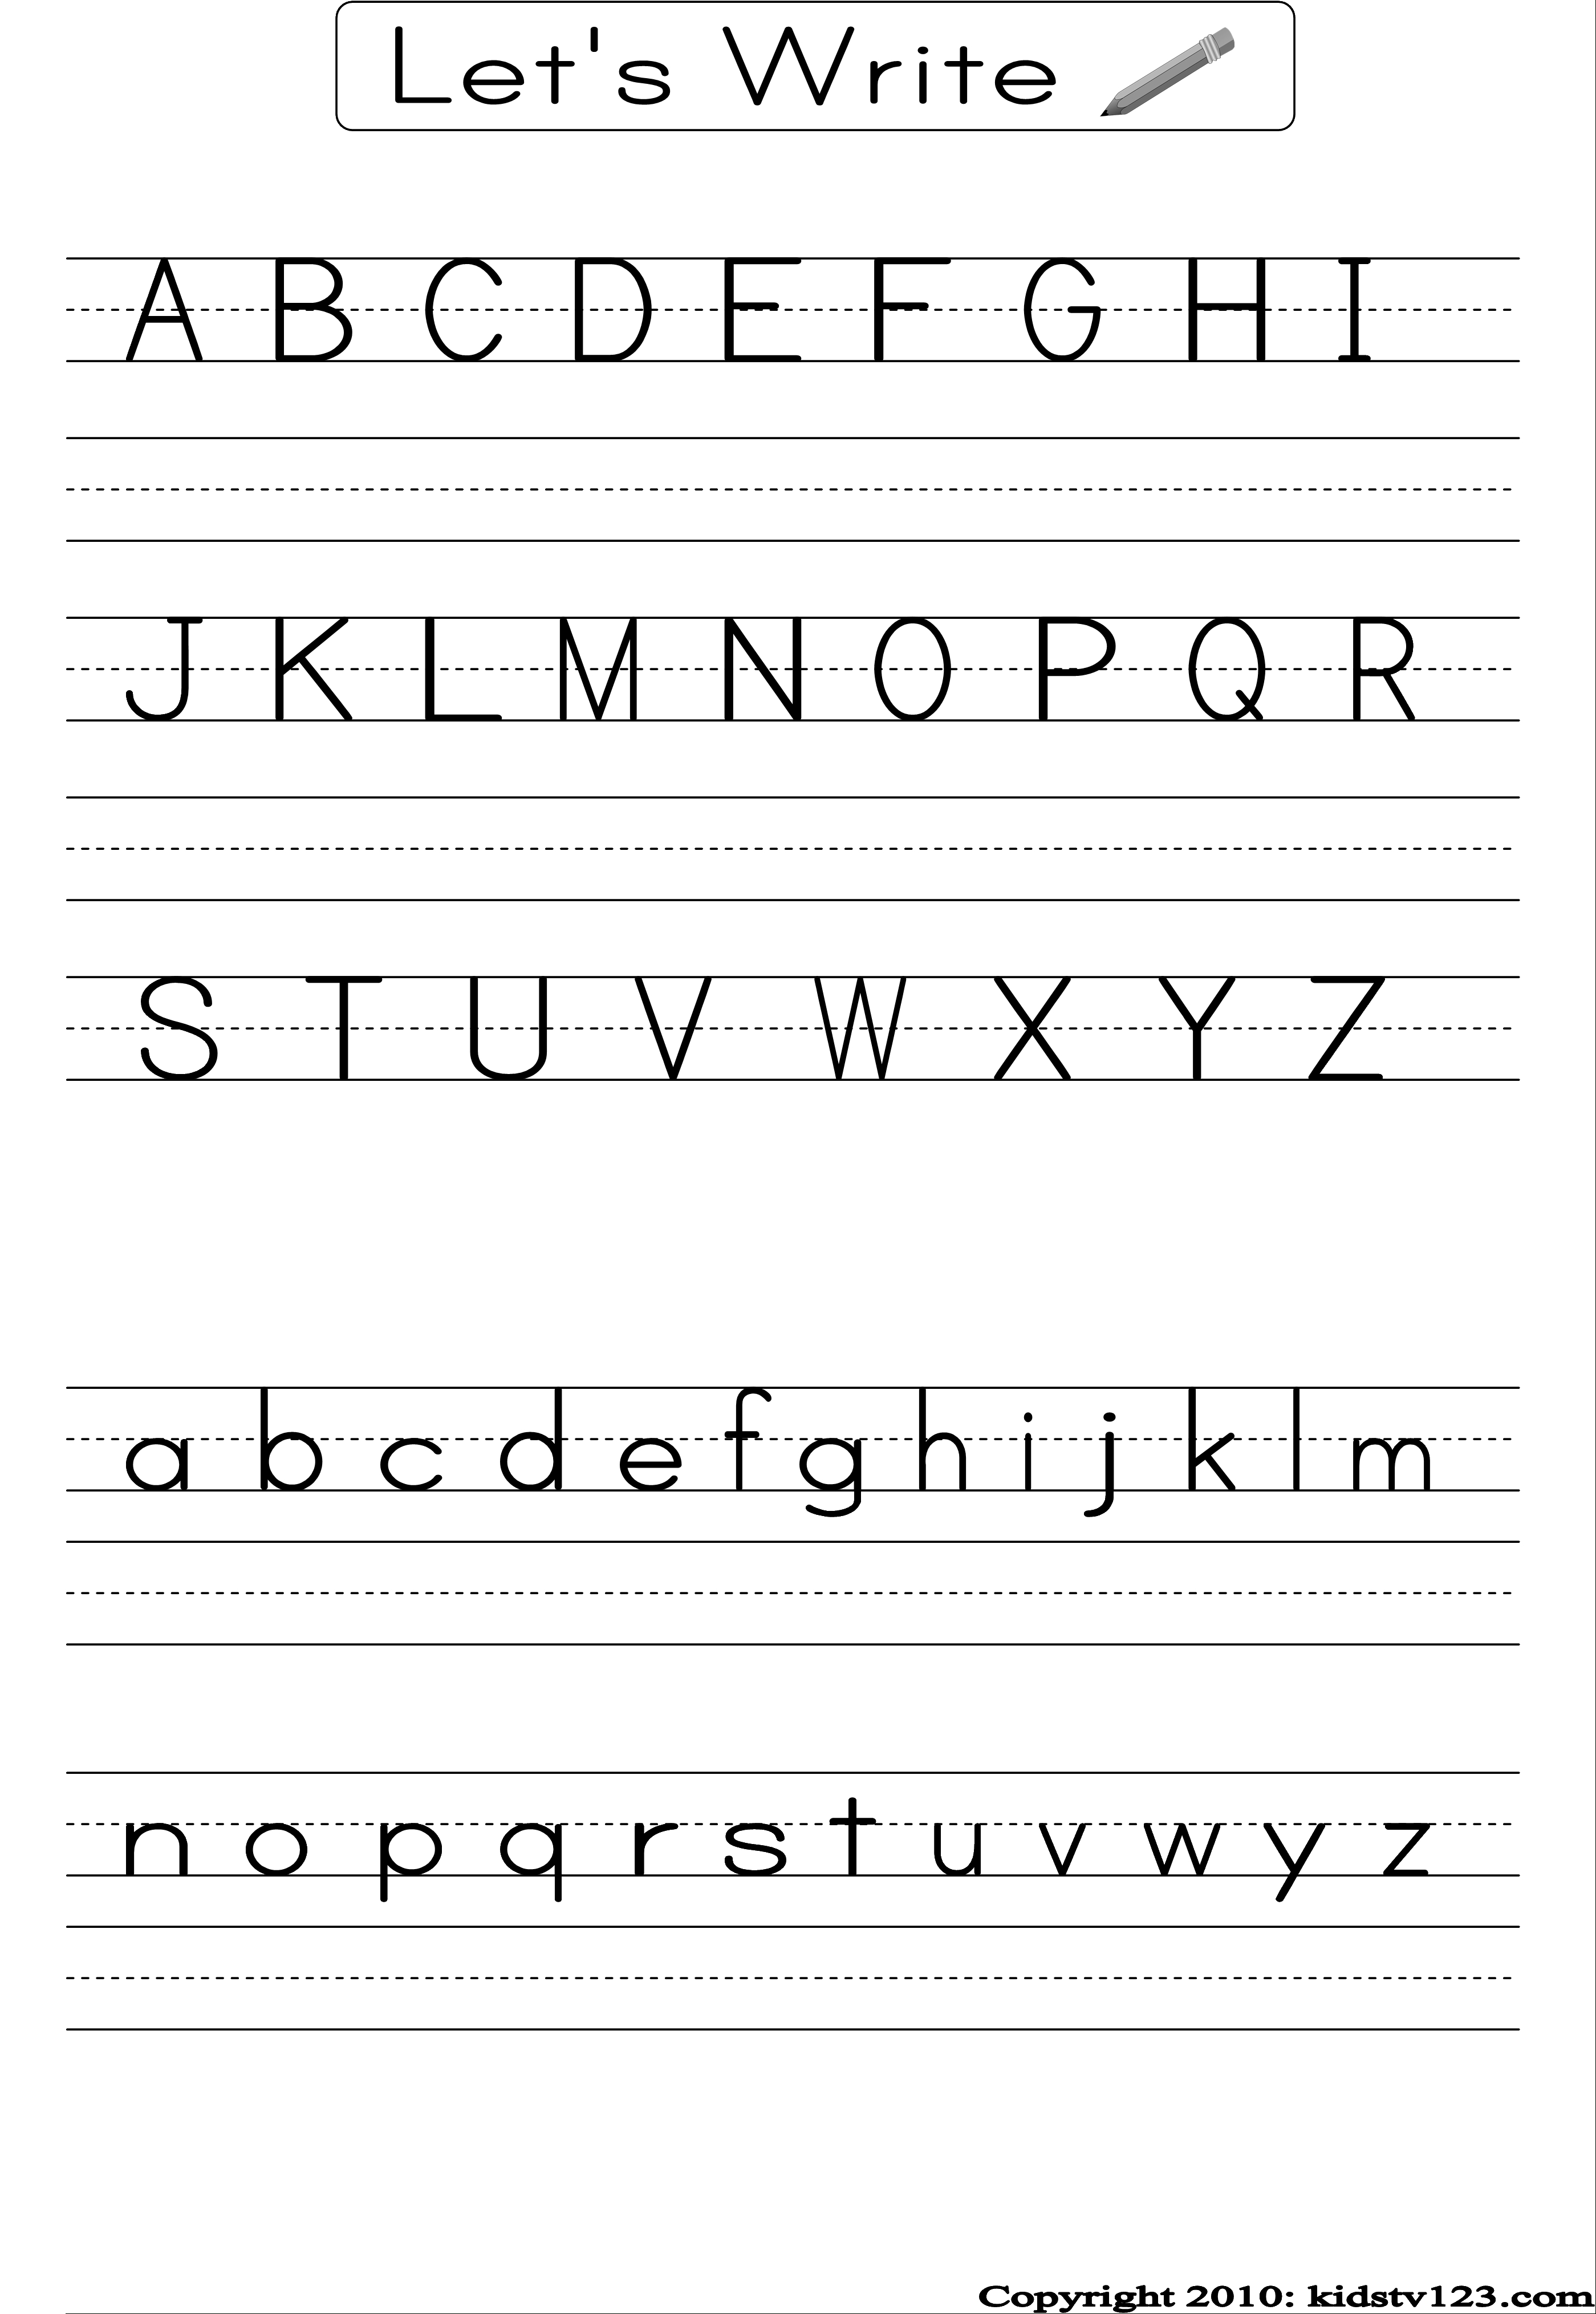 Free Printable Alphabet Worksheets, Preschool Writing And Pattern - Free Printable Letter Writing Worksheets